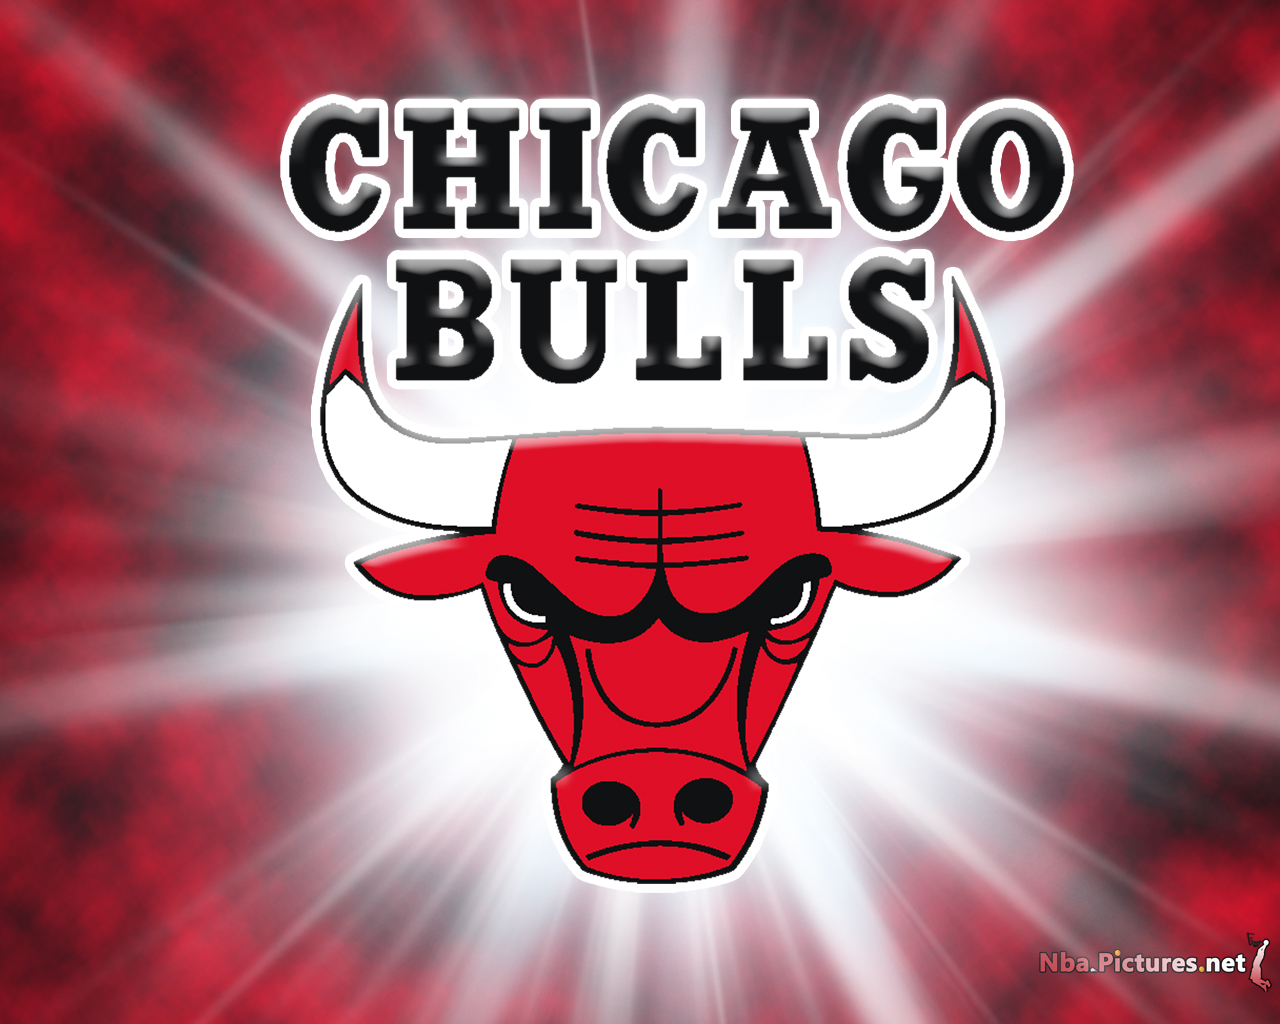 New Chicago Bulls background Chicago Bulls wallpapers